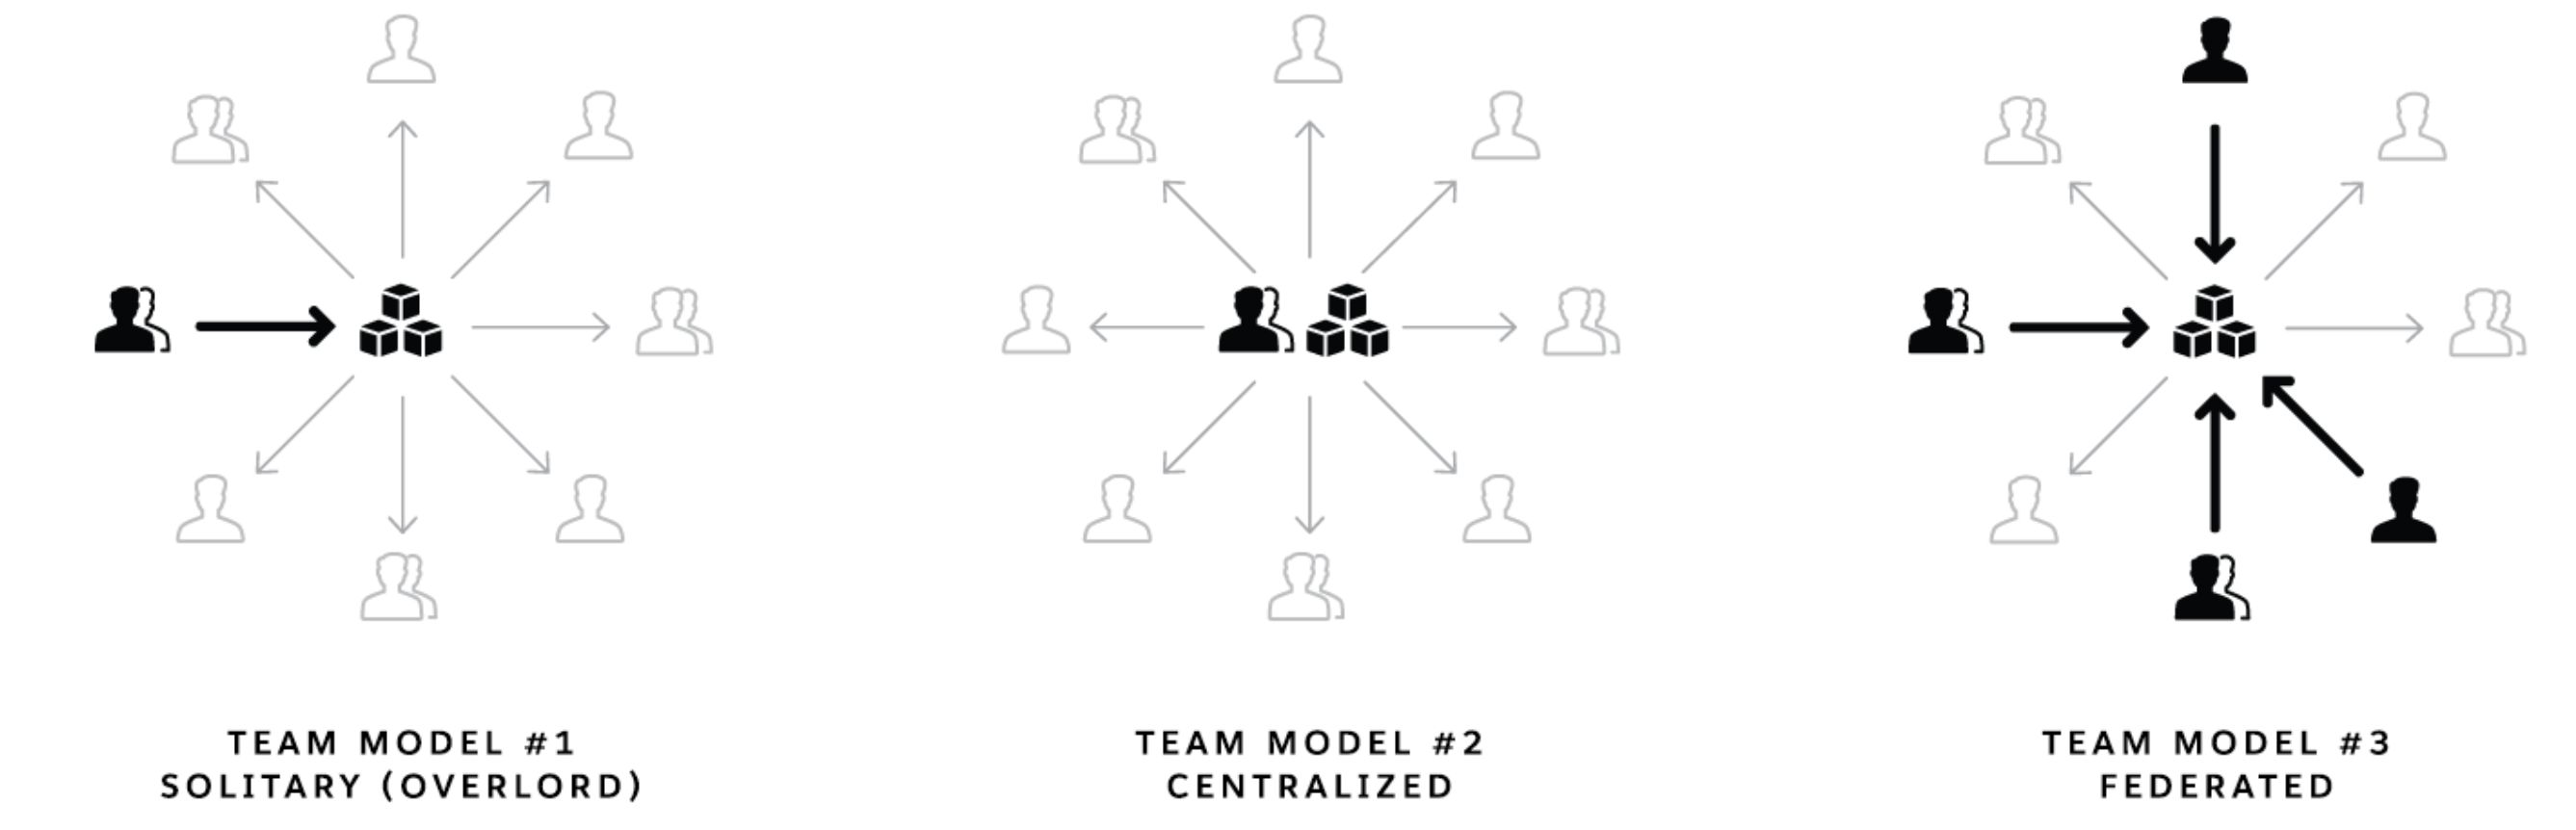 Team Models 1,2,3